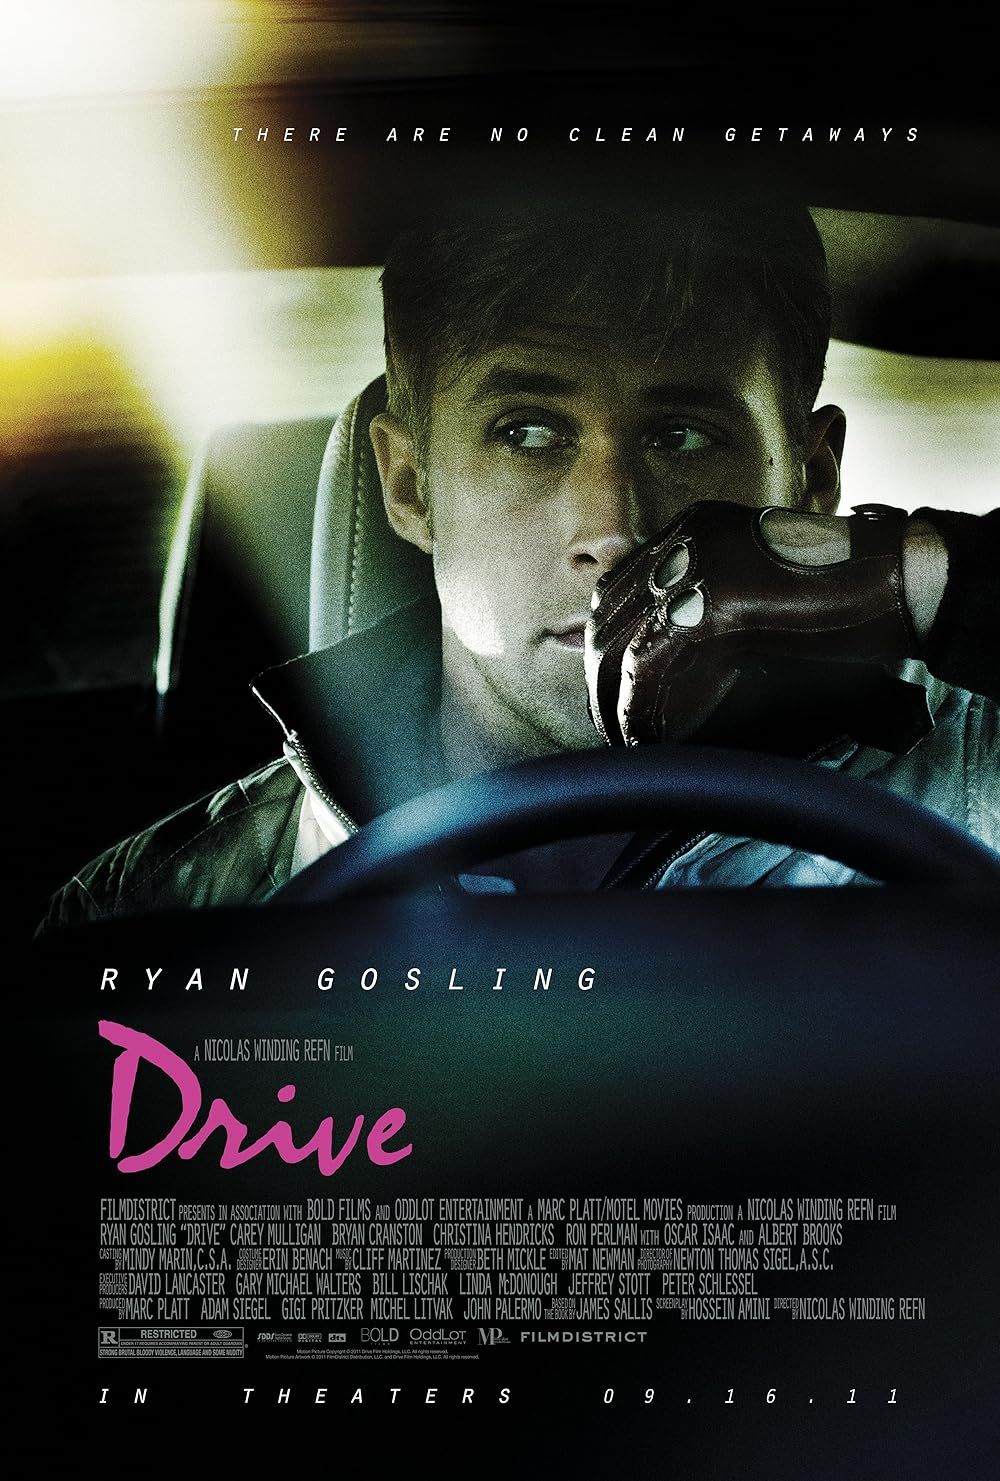 Ryan Gosling behind the wheel in Drive Poster